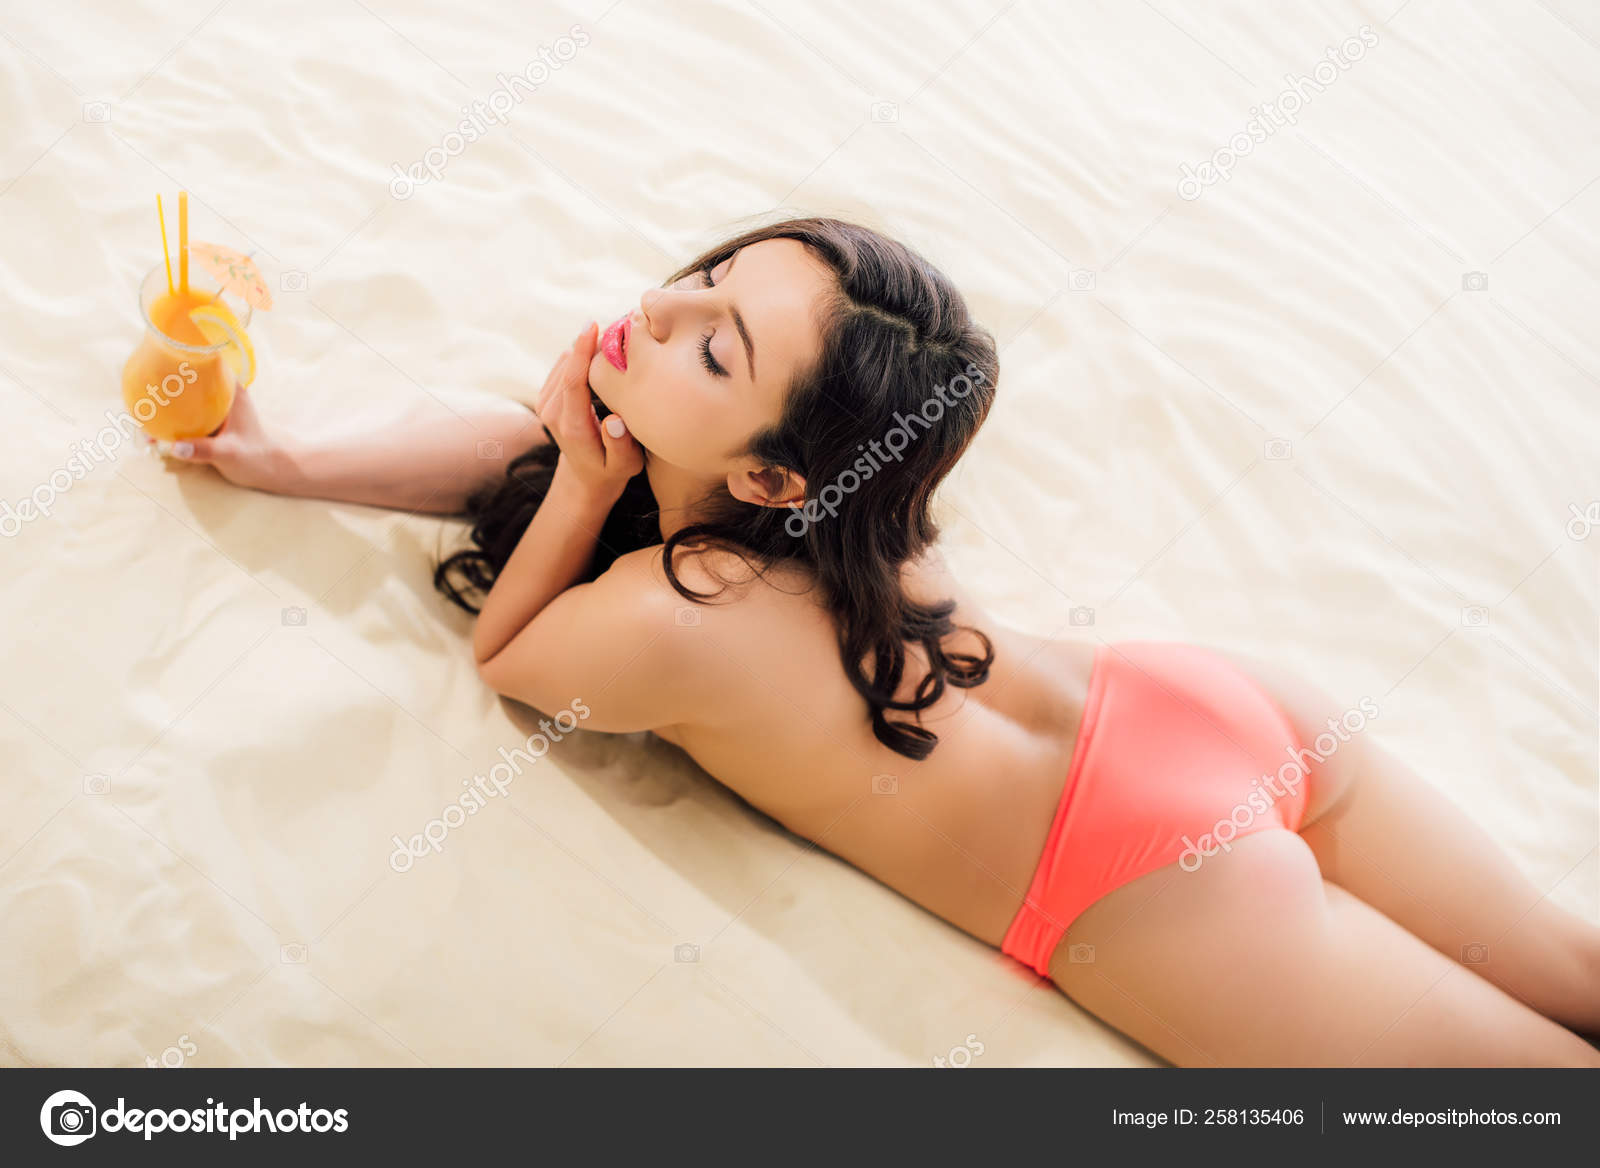 Beautiful Topless Girl Cocktail Eyes Closed Lying Beach Stock Photo C Vitalikradko 258135406